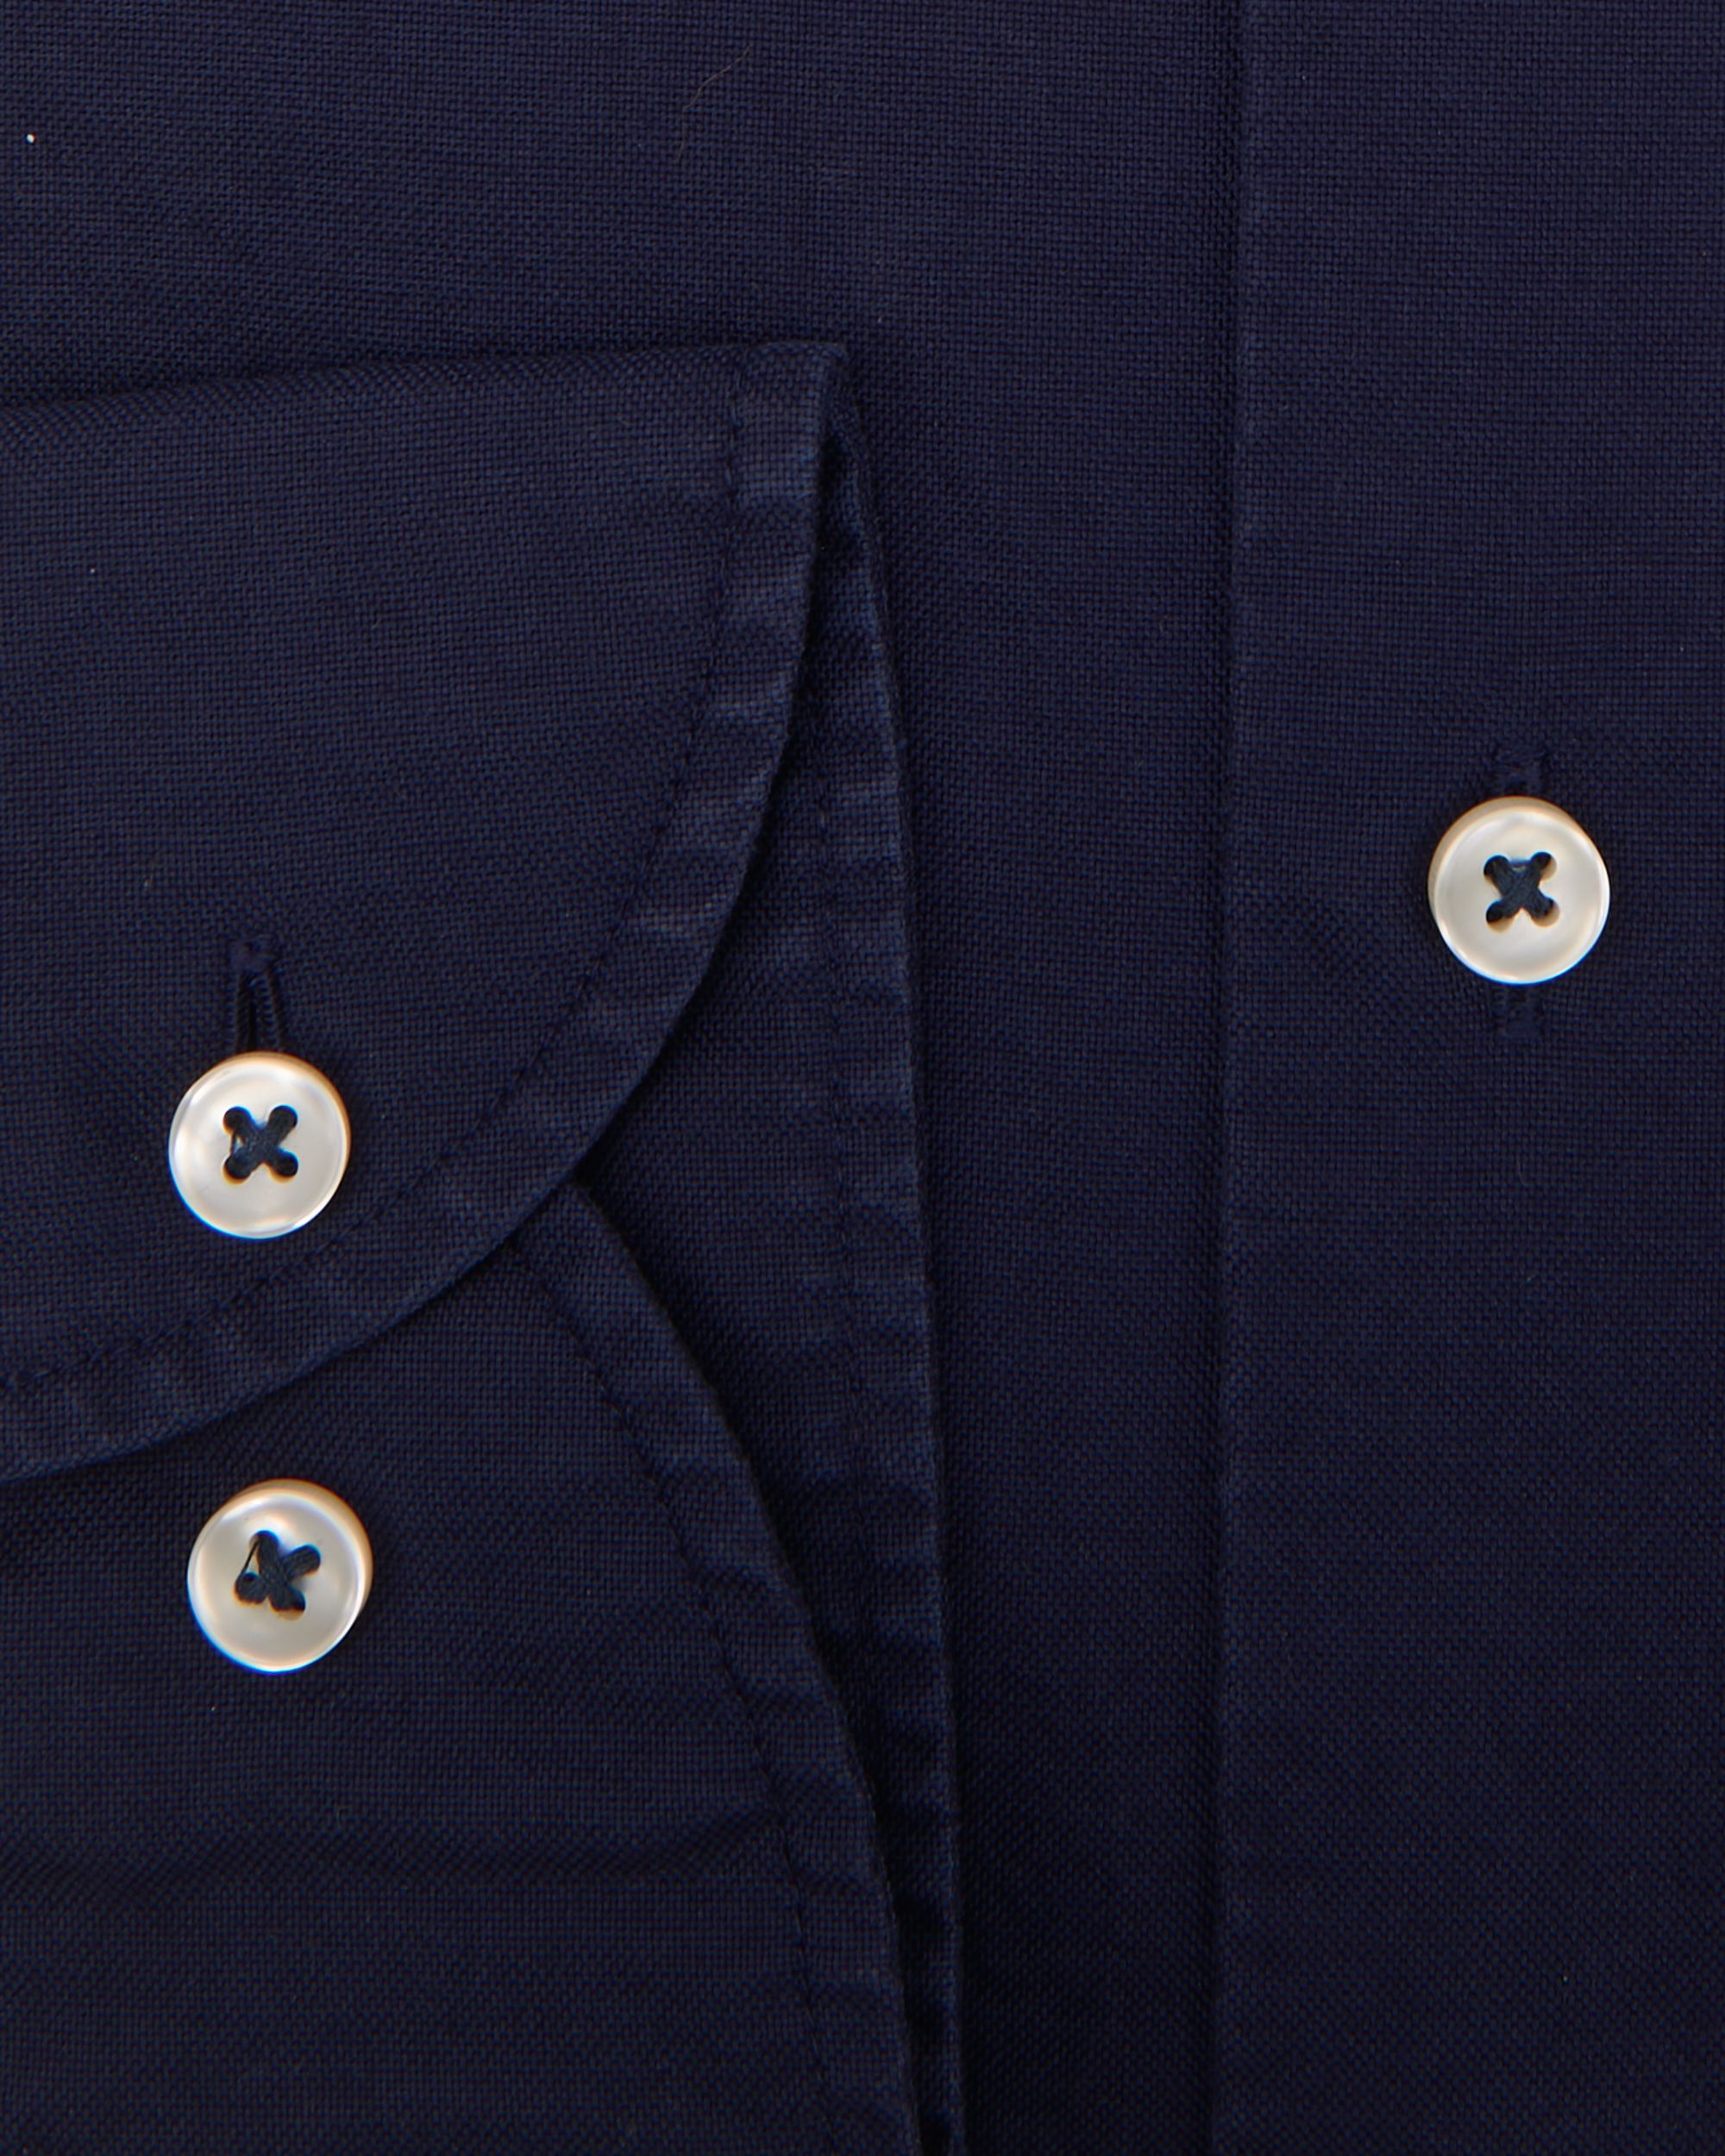 The BLUEPRINT Premium Trendy Overhemd LM Donkerblauw uni 078401-006-L